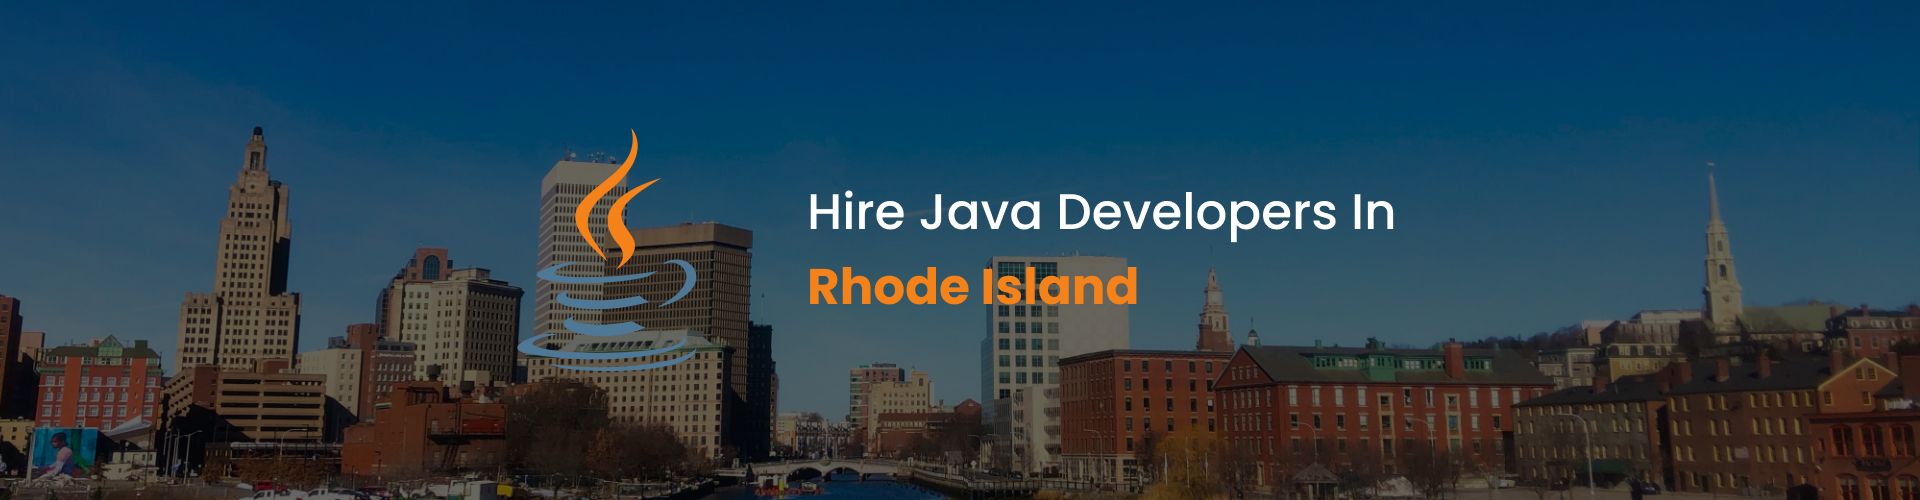 hire java developers in rhode island